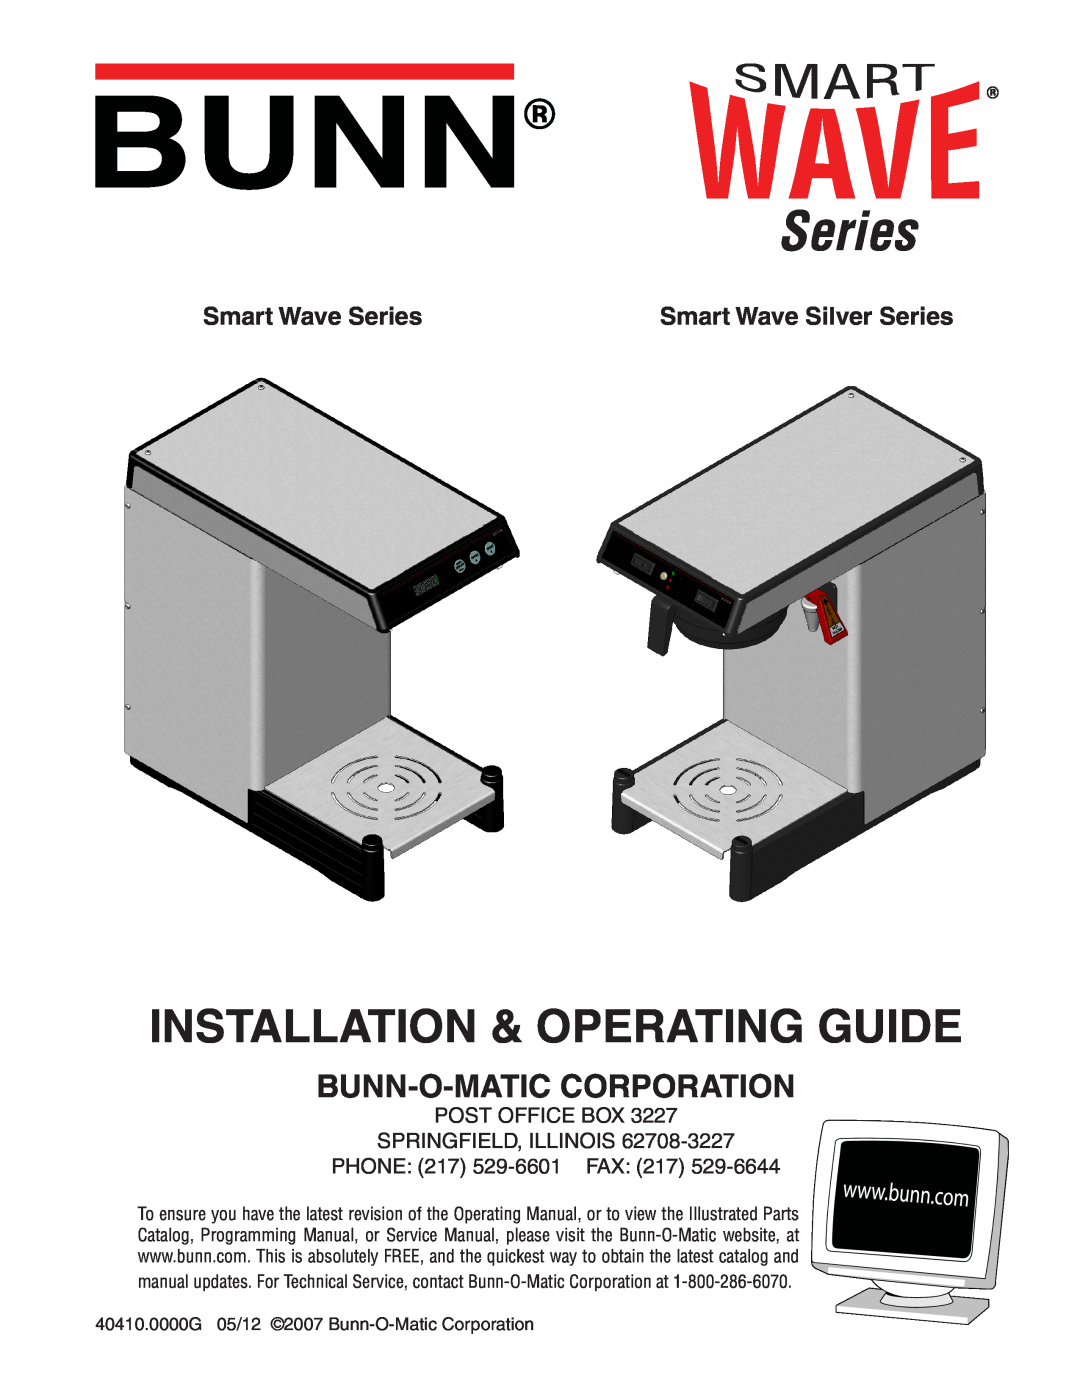 Bunn 40410.0000G service manual Bunn-O-Matic Corporation, Smart Wave Series, Installation & Operating Guide 